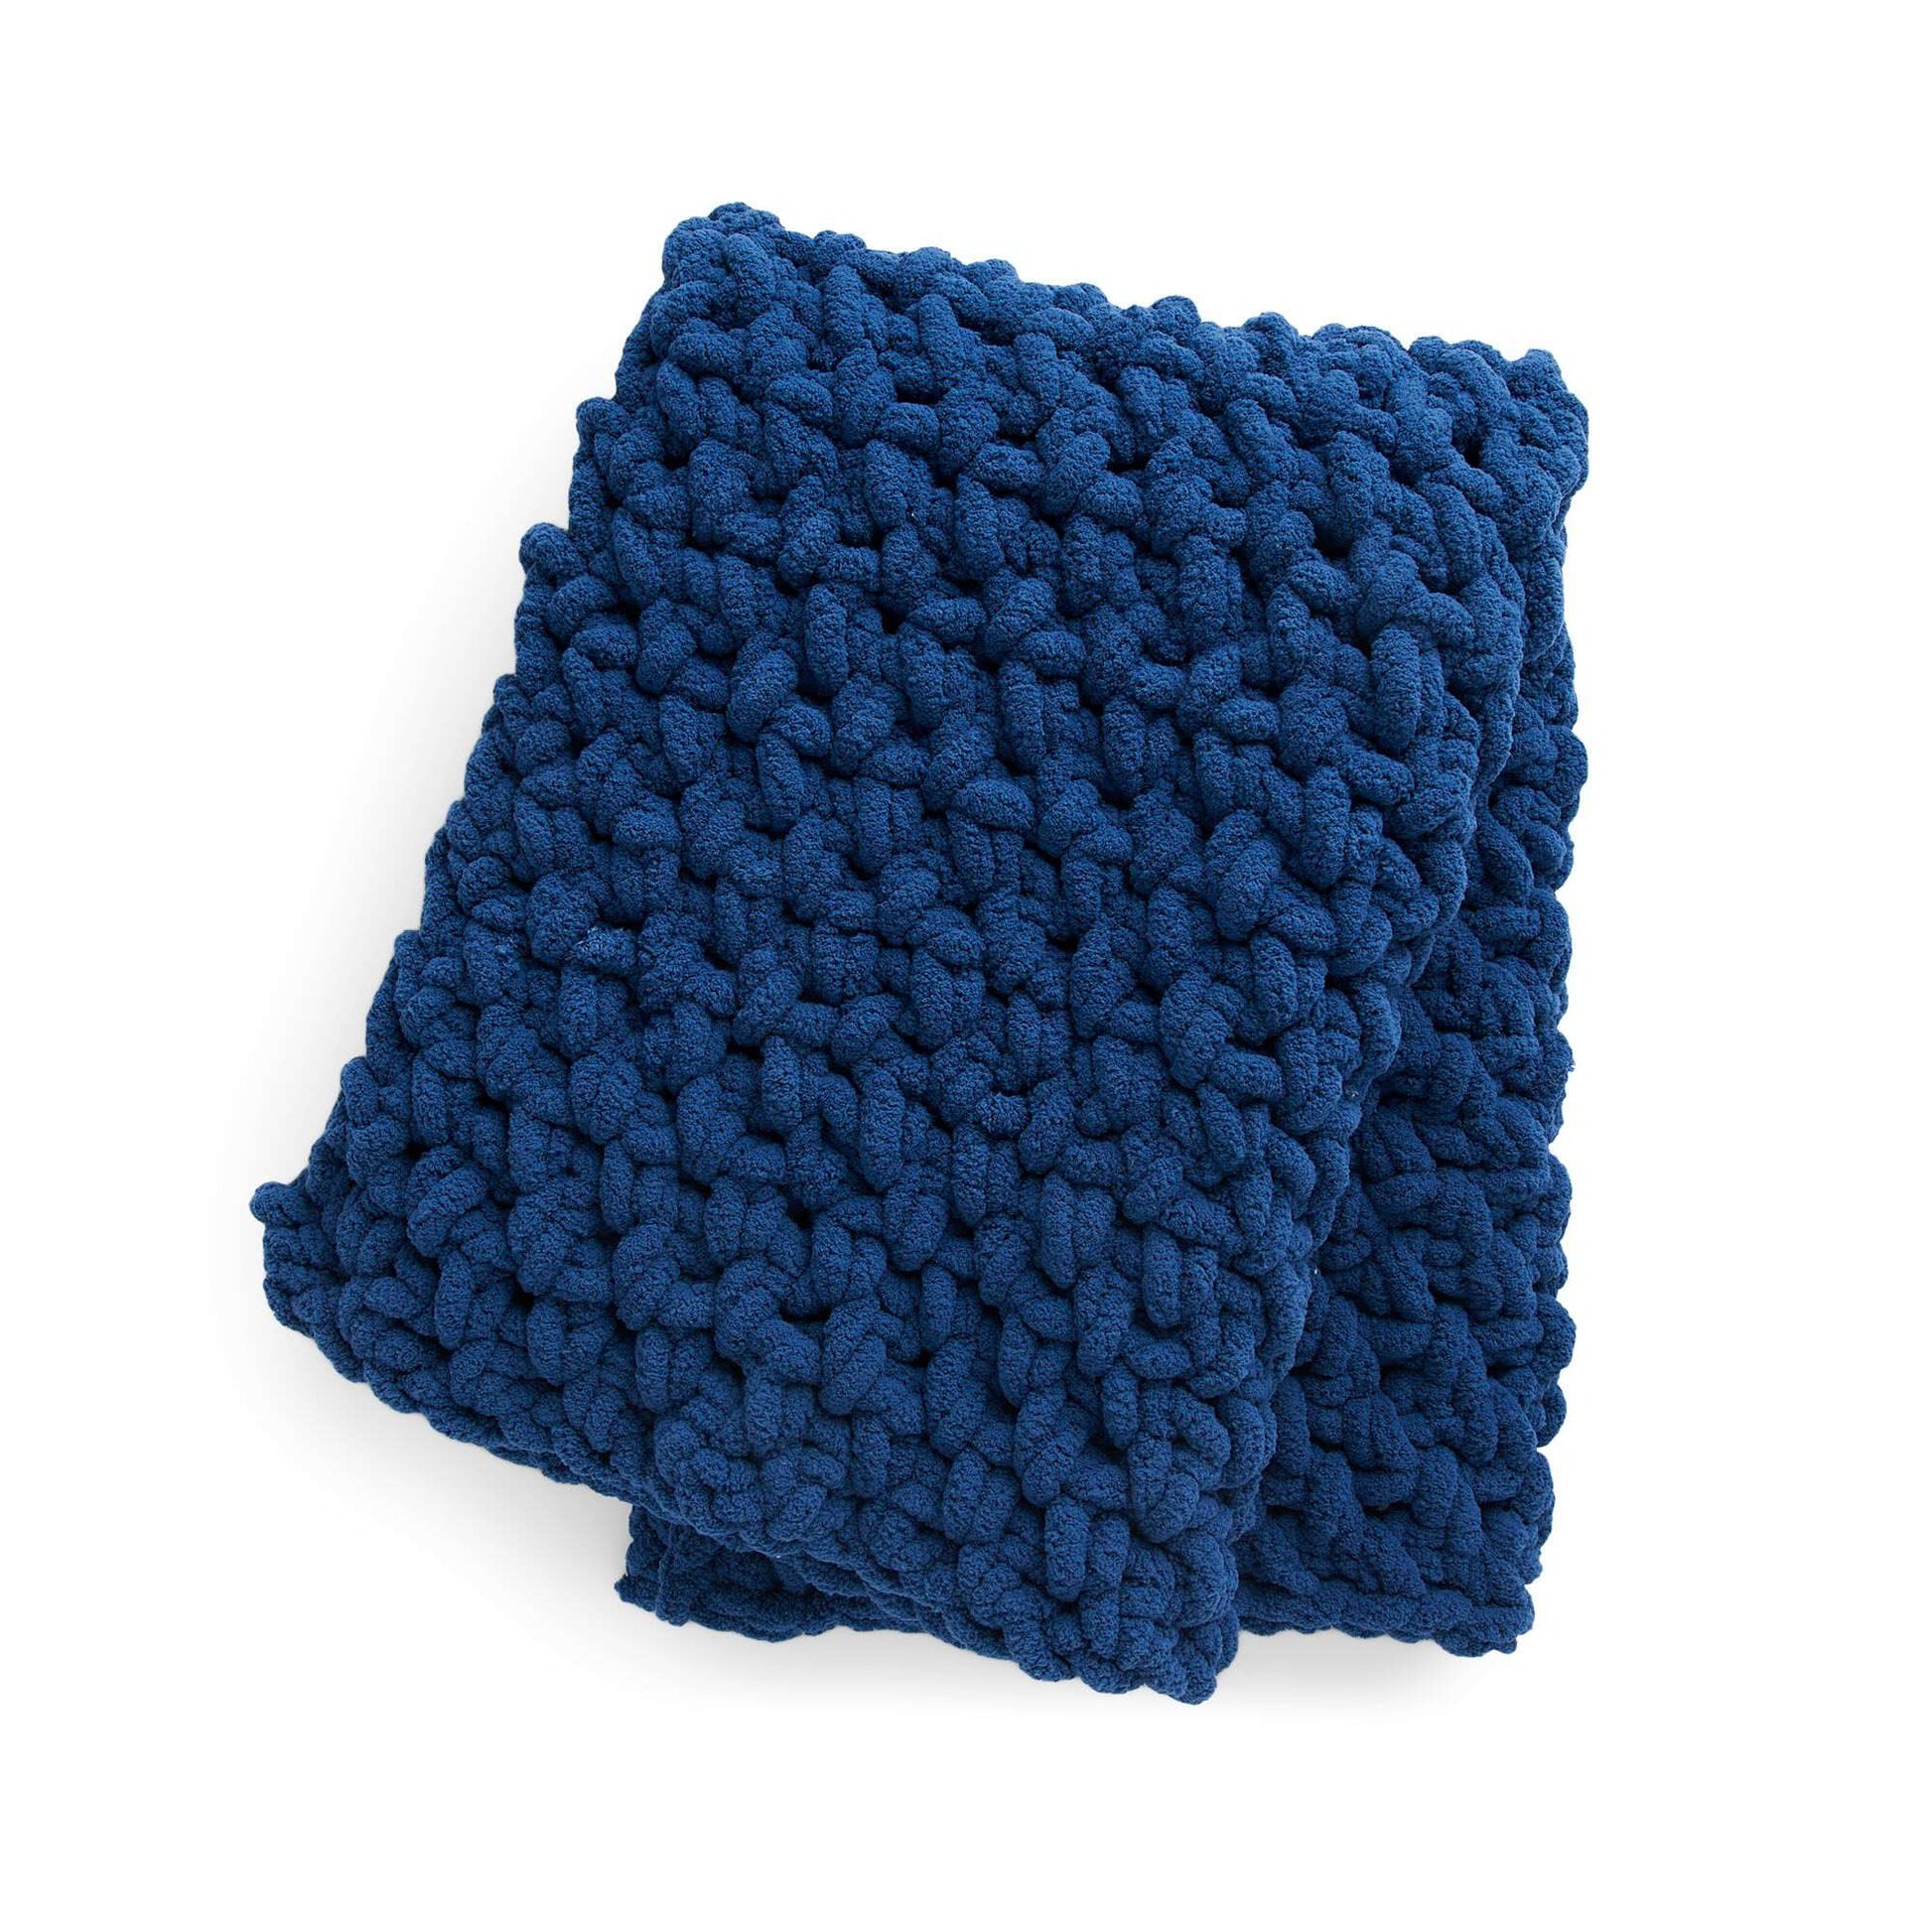 Free Bernat Massive Moss Stitch Crochet Blanket Pattern